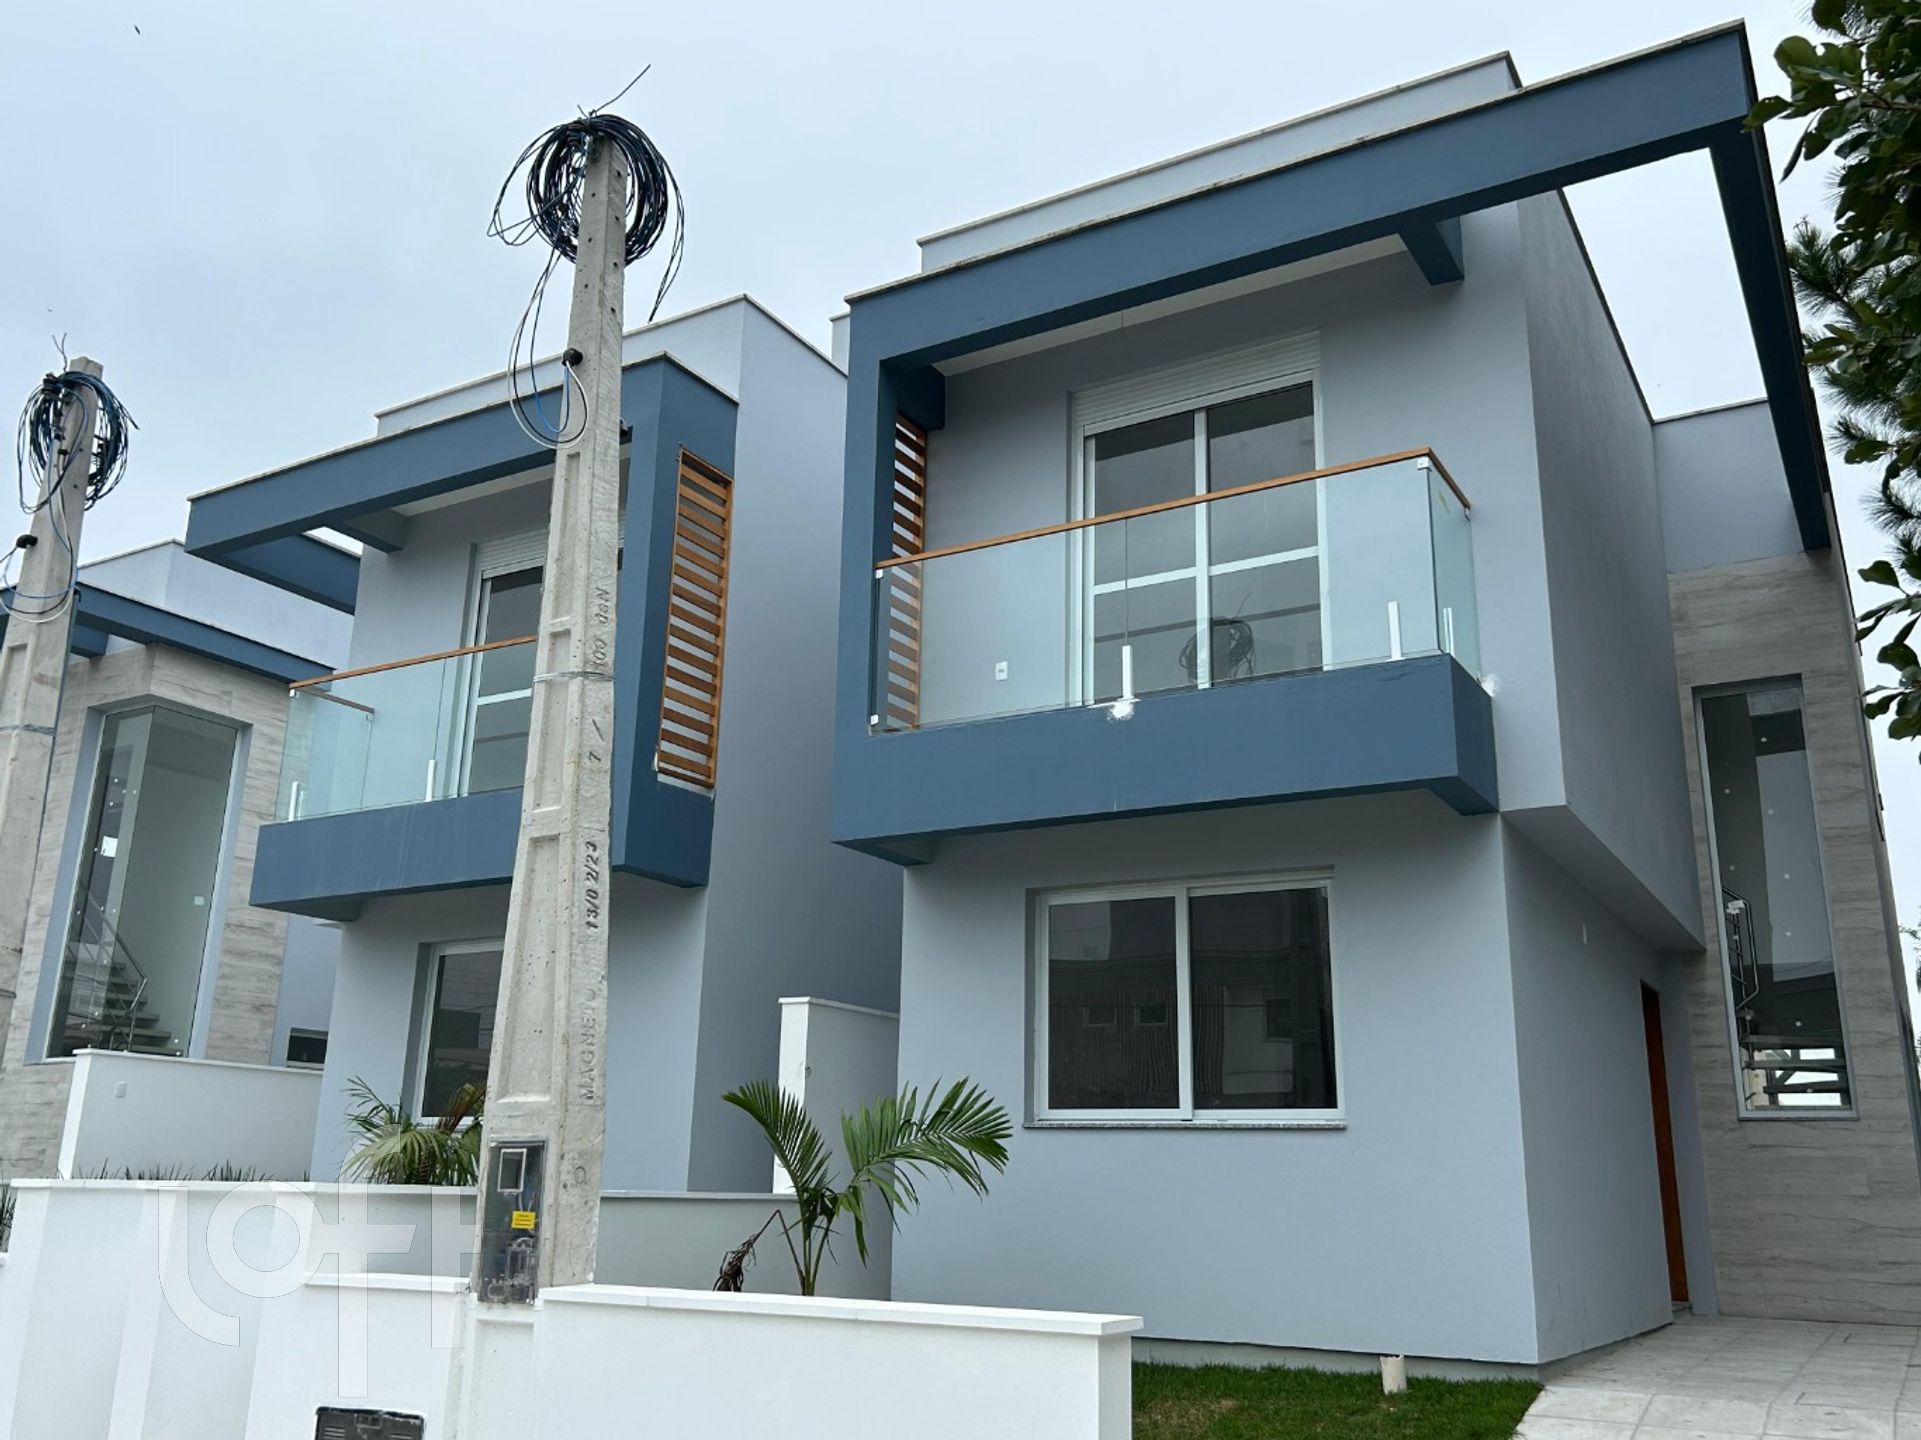 VENDA &#8211; Casa de 3 quartos no bairro Campeche Central, Florianópolis &#8211; 9127